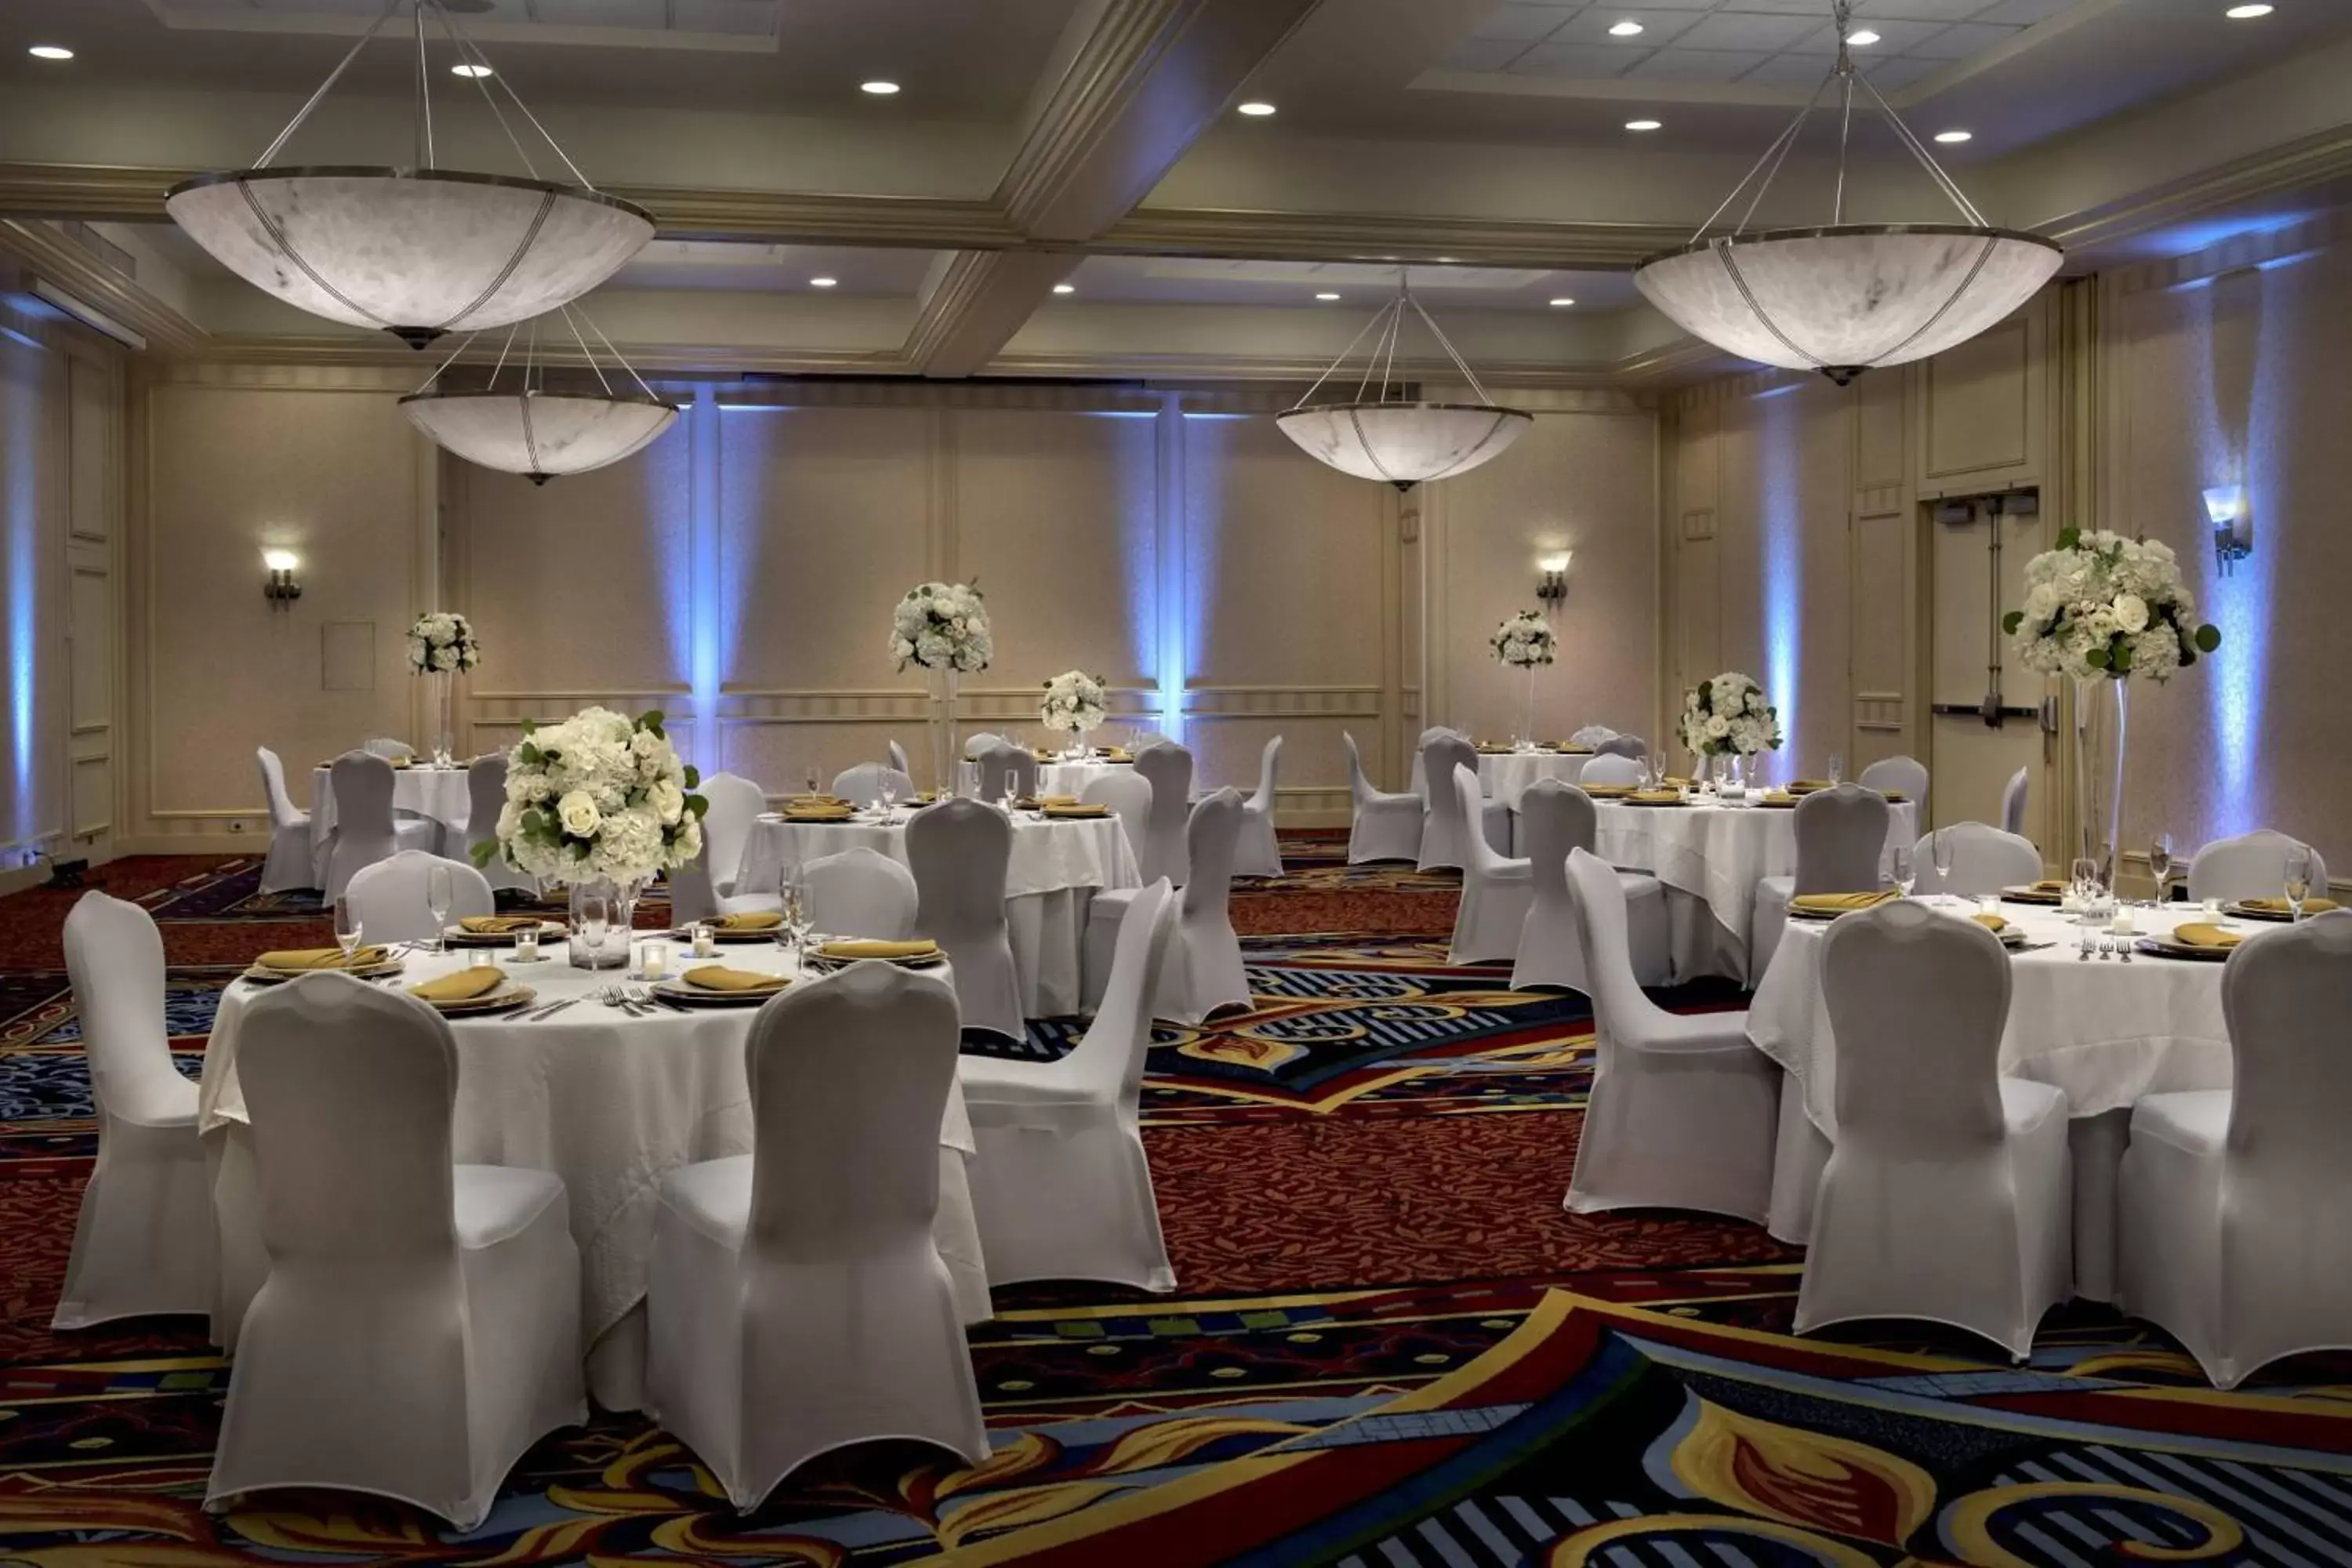 Banquet/Function facilities, Banquet Facilities in Marriott Saddle Brook